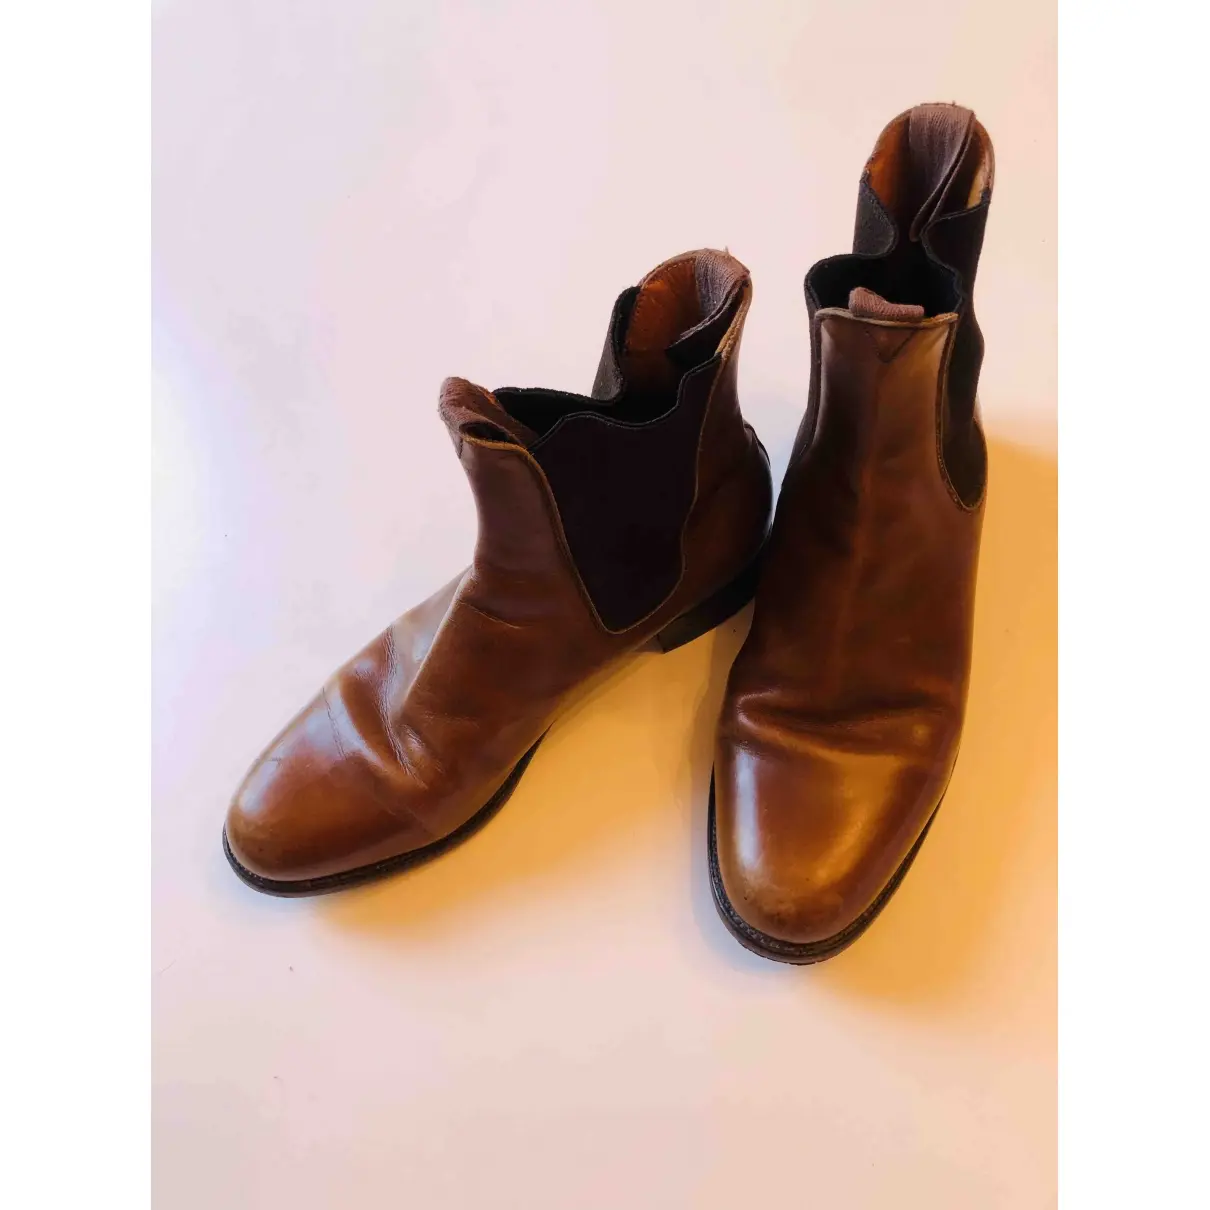 JM Weston Leather ankle boots for sale - Vintage